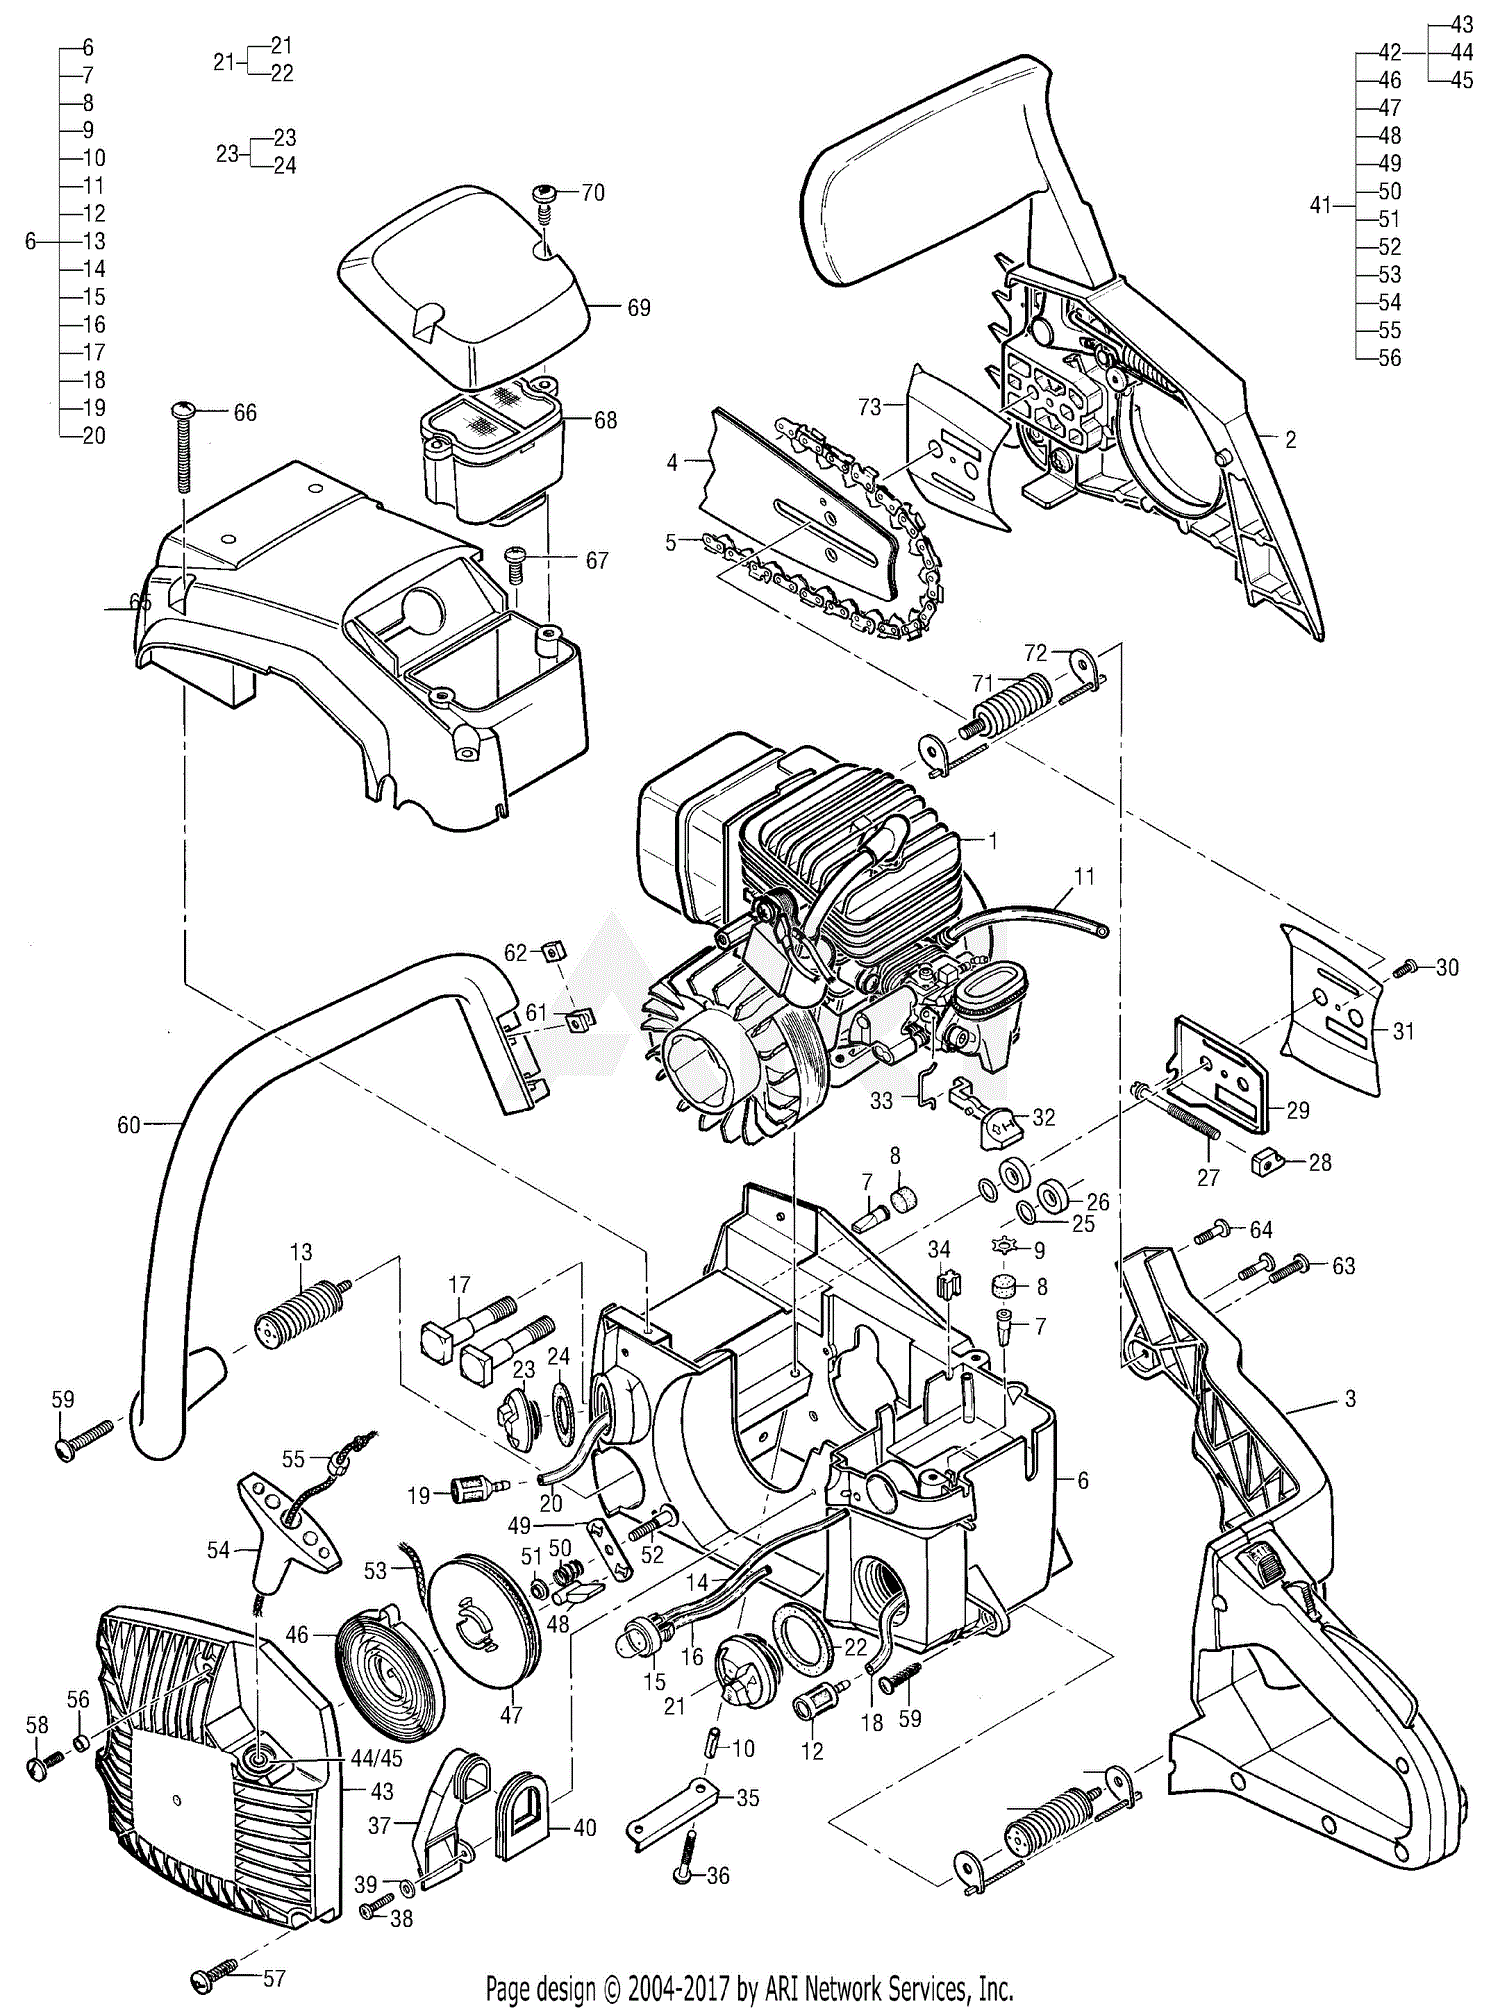 mcculloch chainsaw parts diagram